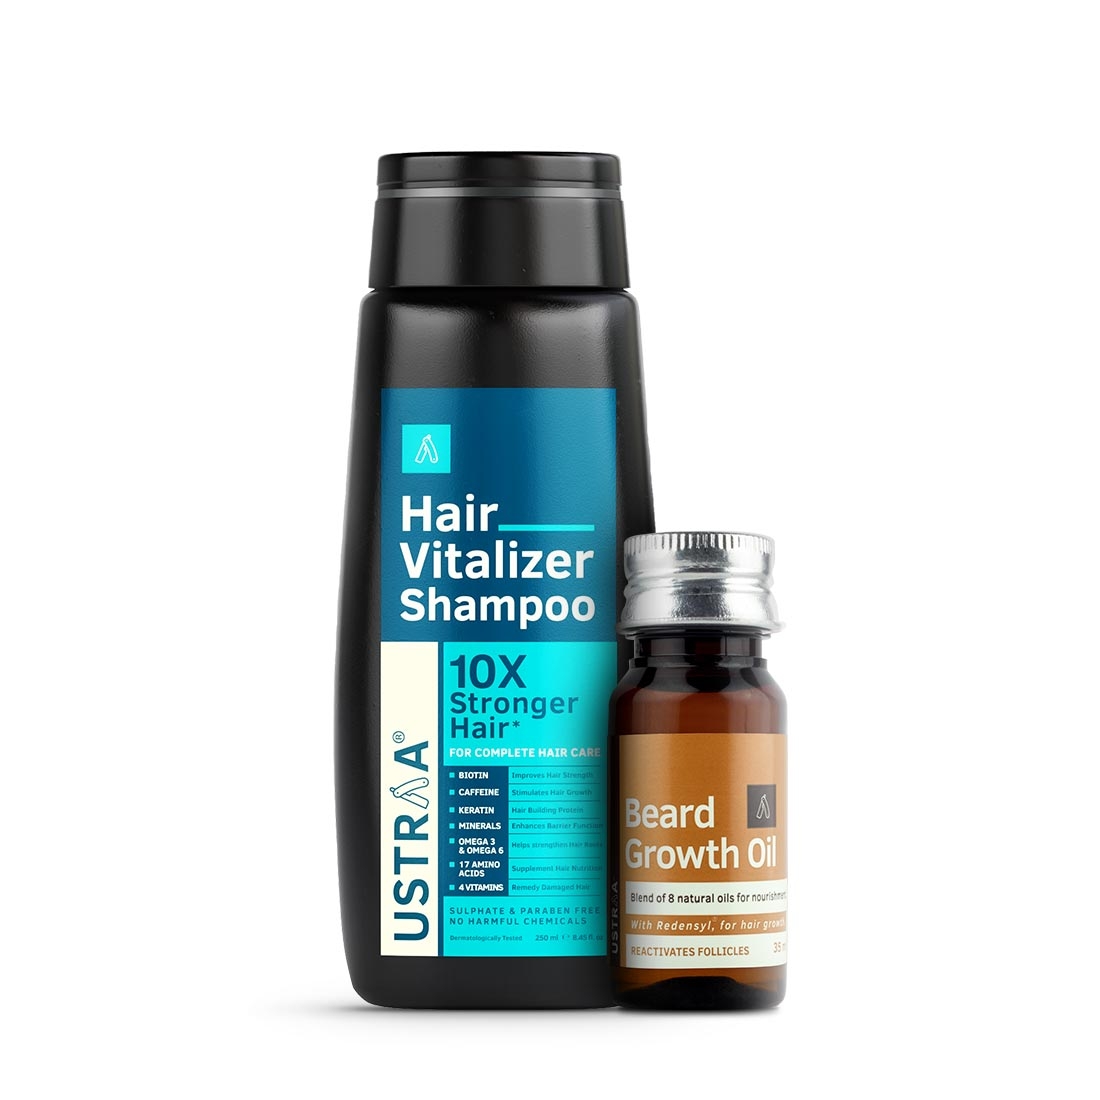 Ustraa | Ustraa Hair Vitalizer Shampoo - 250ml & Beard growth Oil - 35ml 0